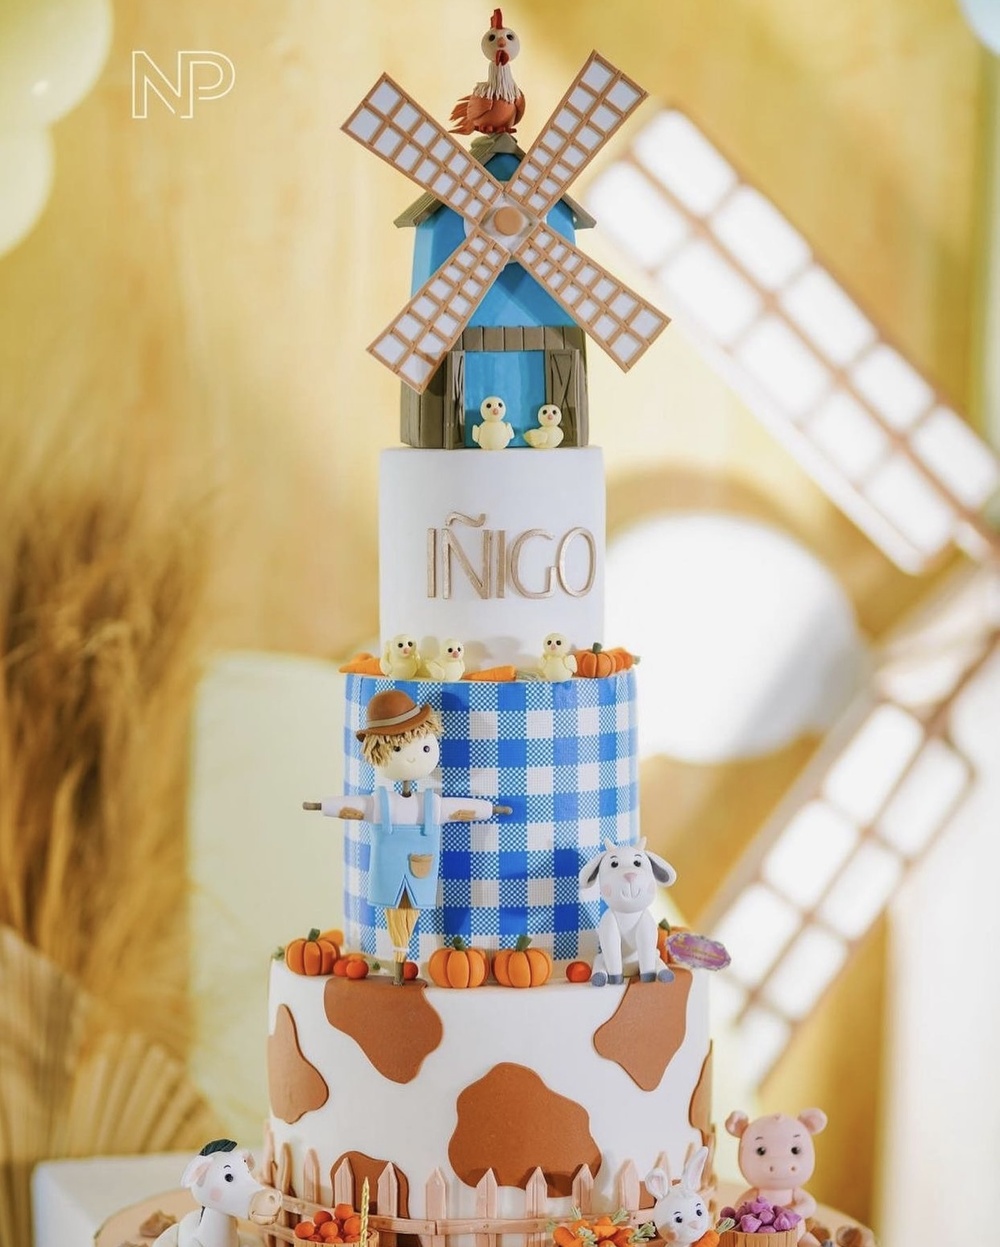 Iñigo's birthday cake is a farm-inspired cake with a windmill candy.